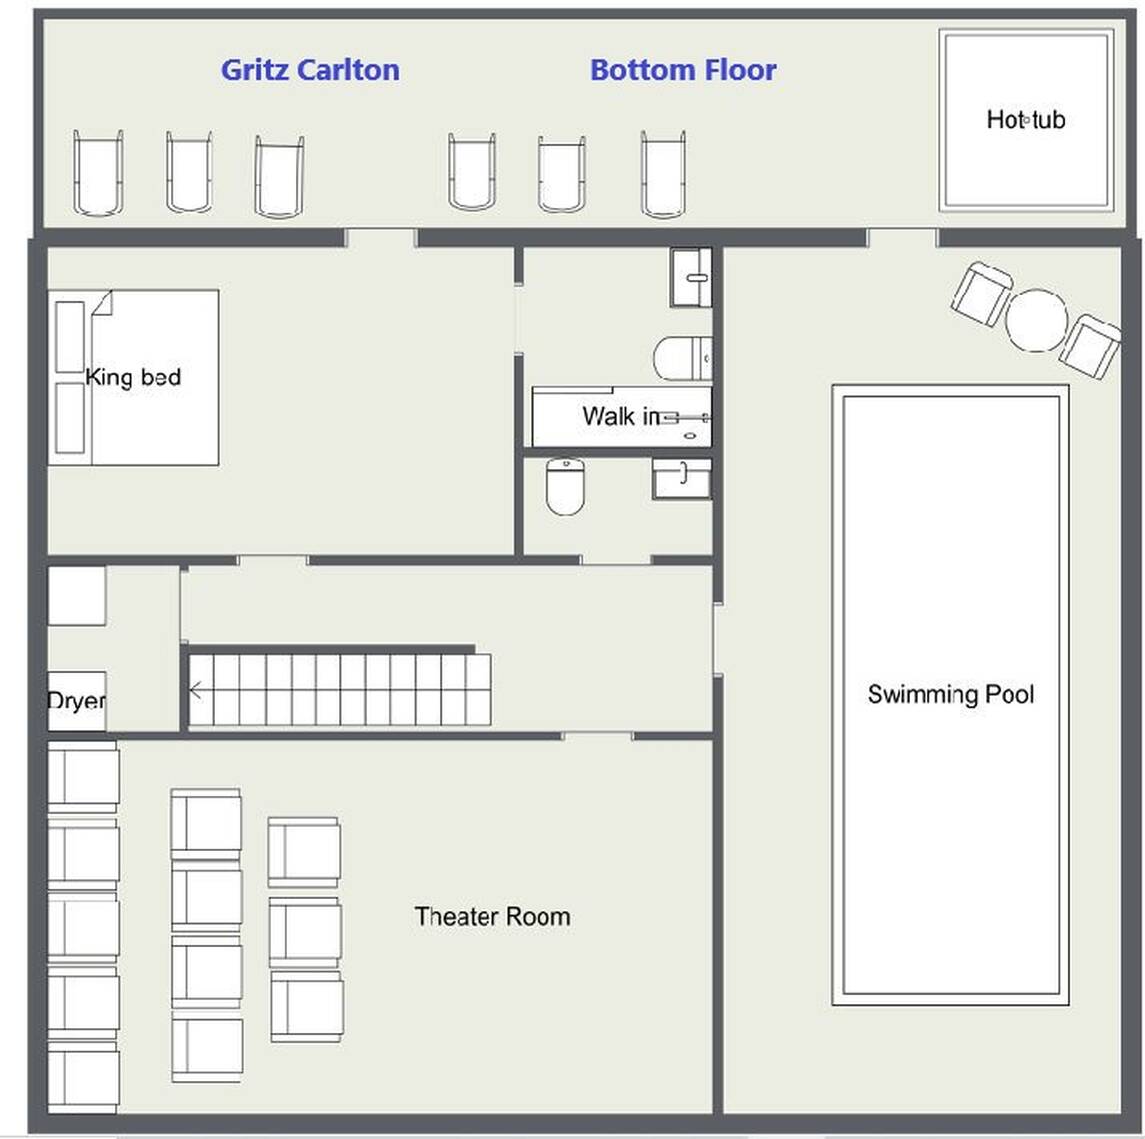 Gritz Carlton  floorplan